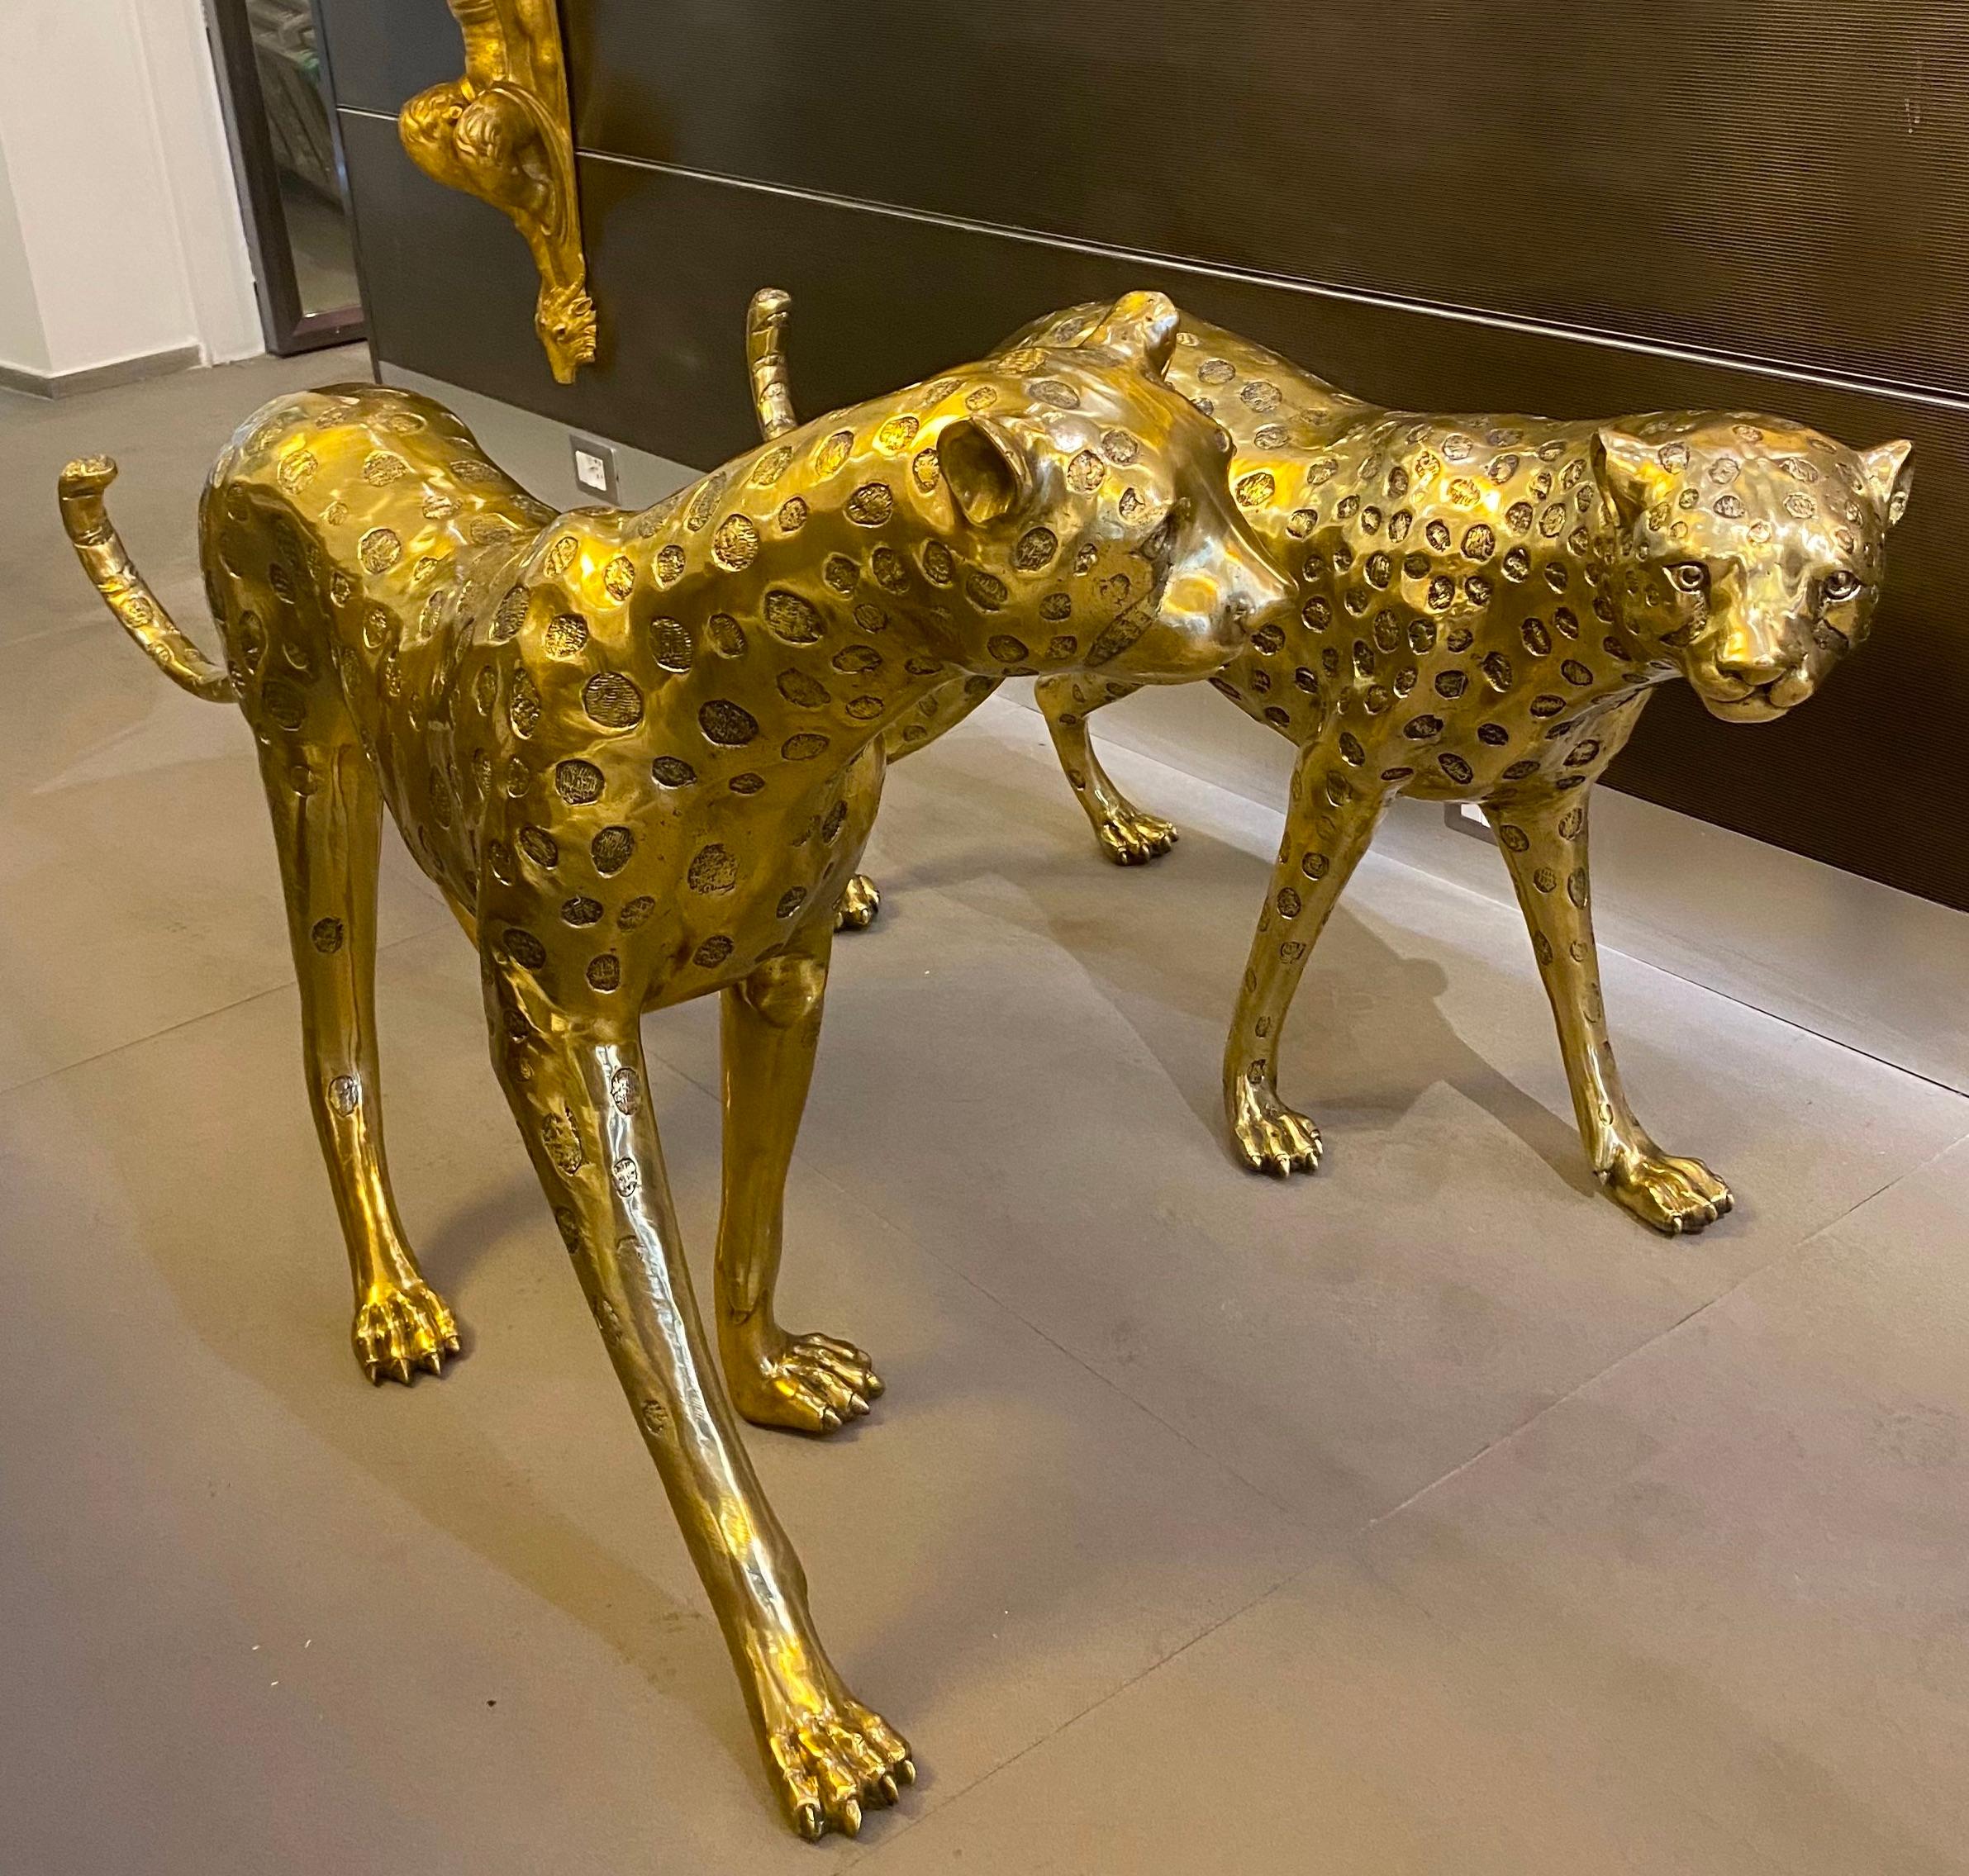 Große Skulpturen von Leoparden aus vergoldeter Bronze